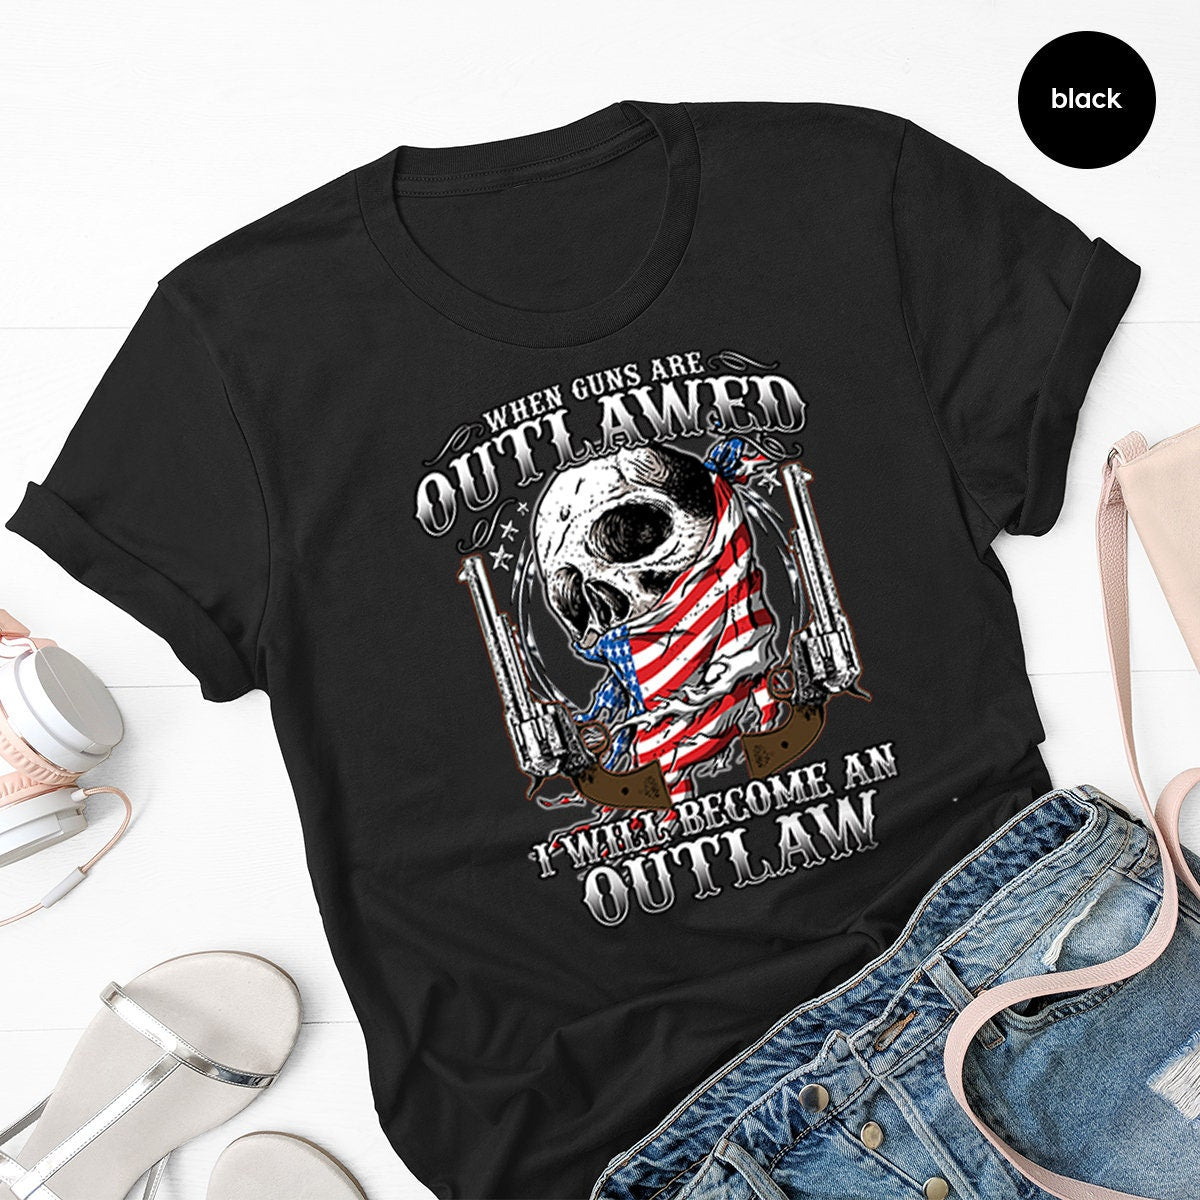 Gun T Shirt,Funny Quote Shirt,When Gun Is Outlawed I Will Become An Shirt,Shirt With Sayings,Gun Rights Shirt,Skulls With Gun Shirt - Fastdeliverytees.com